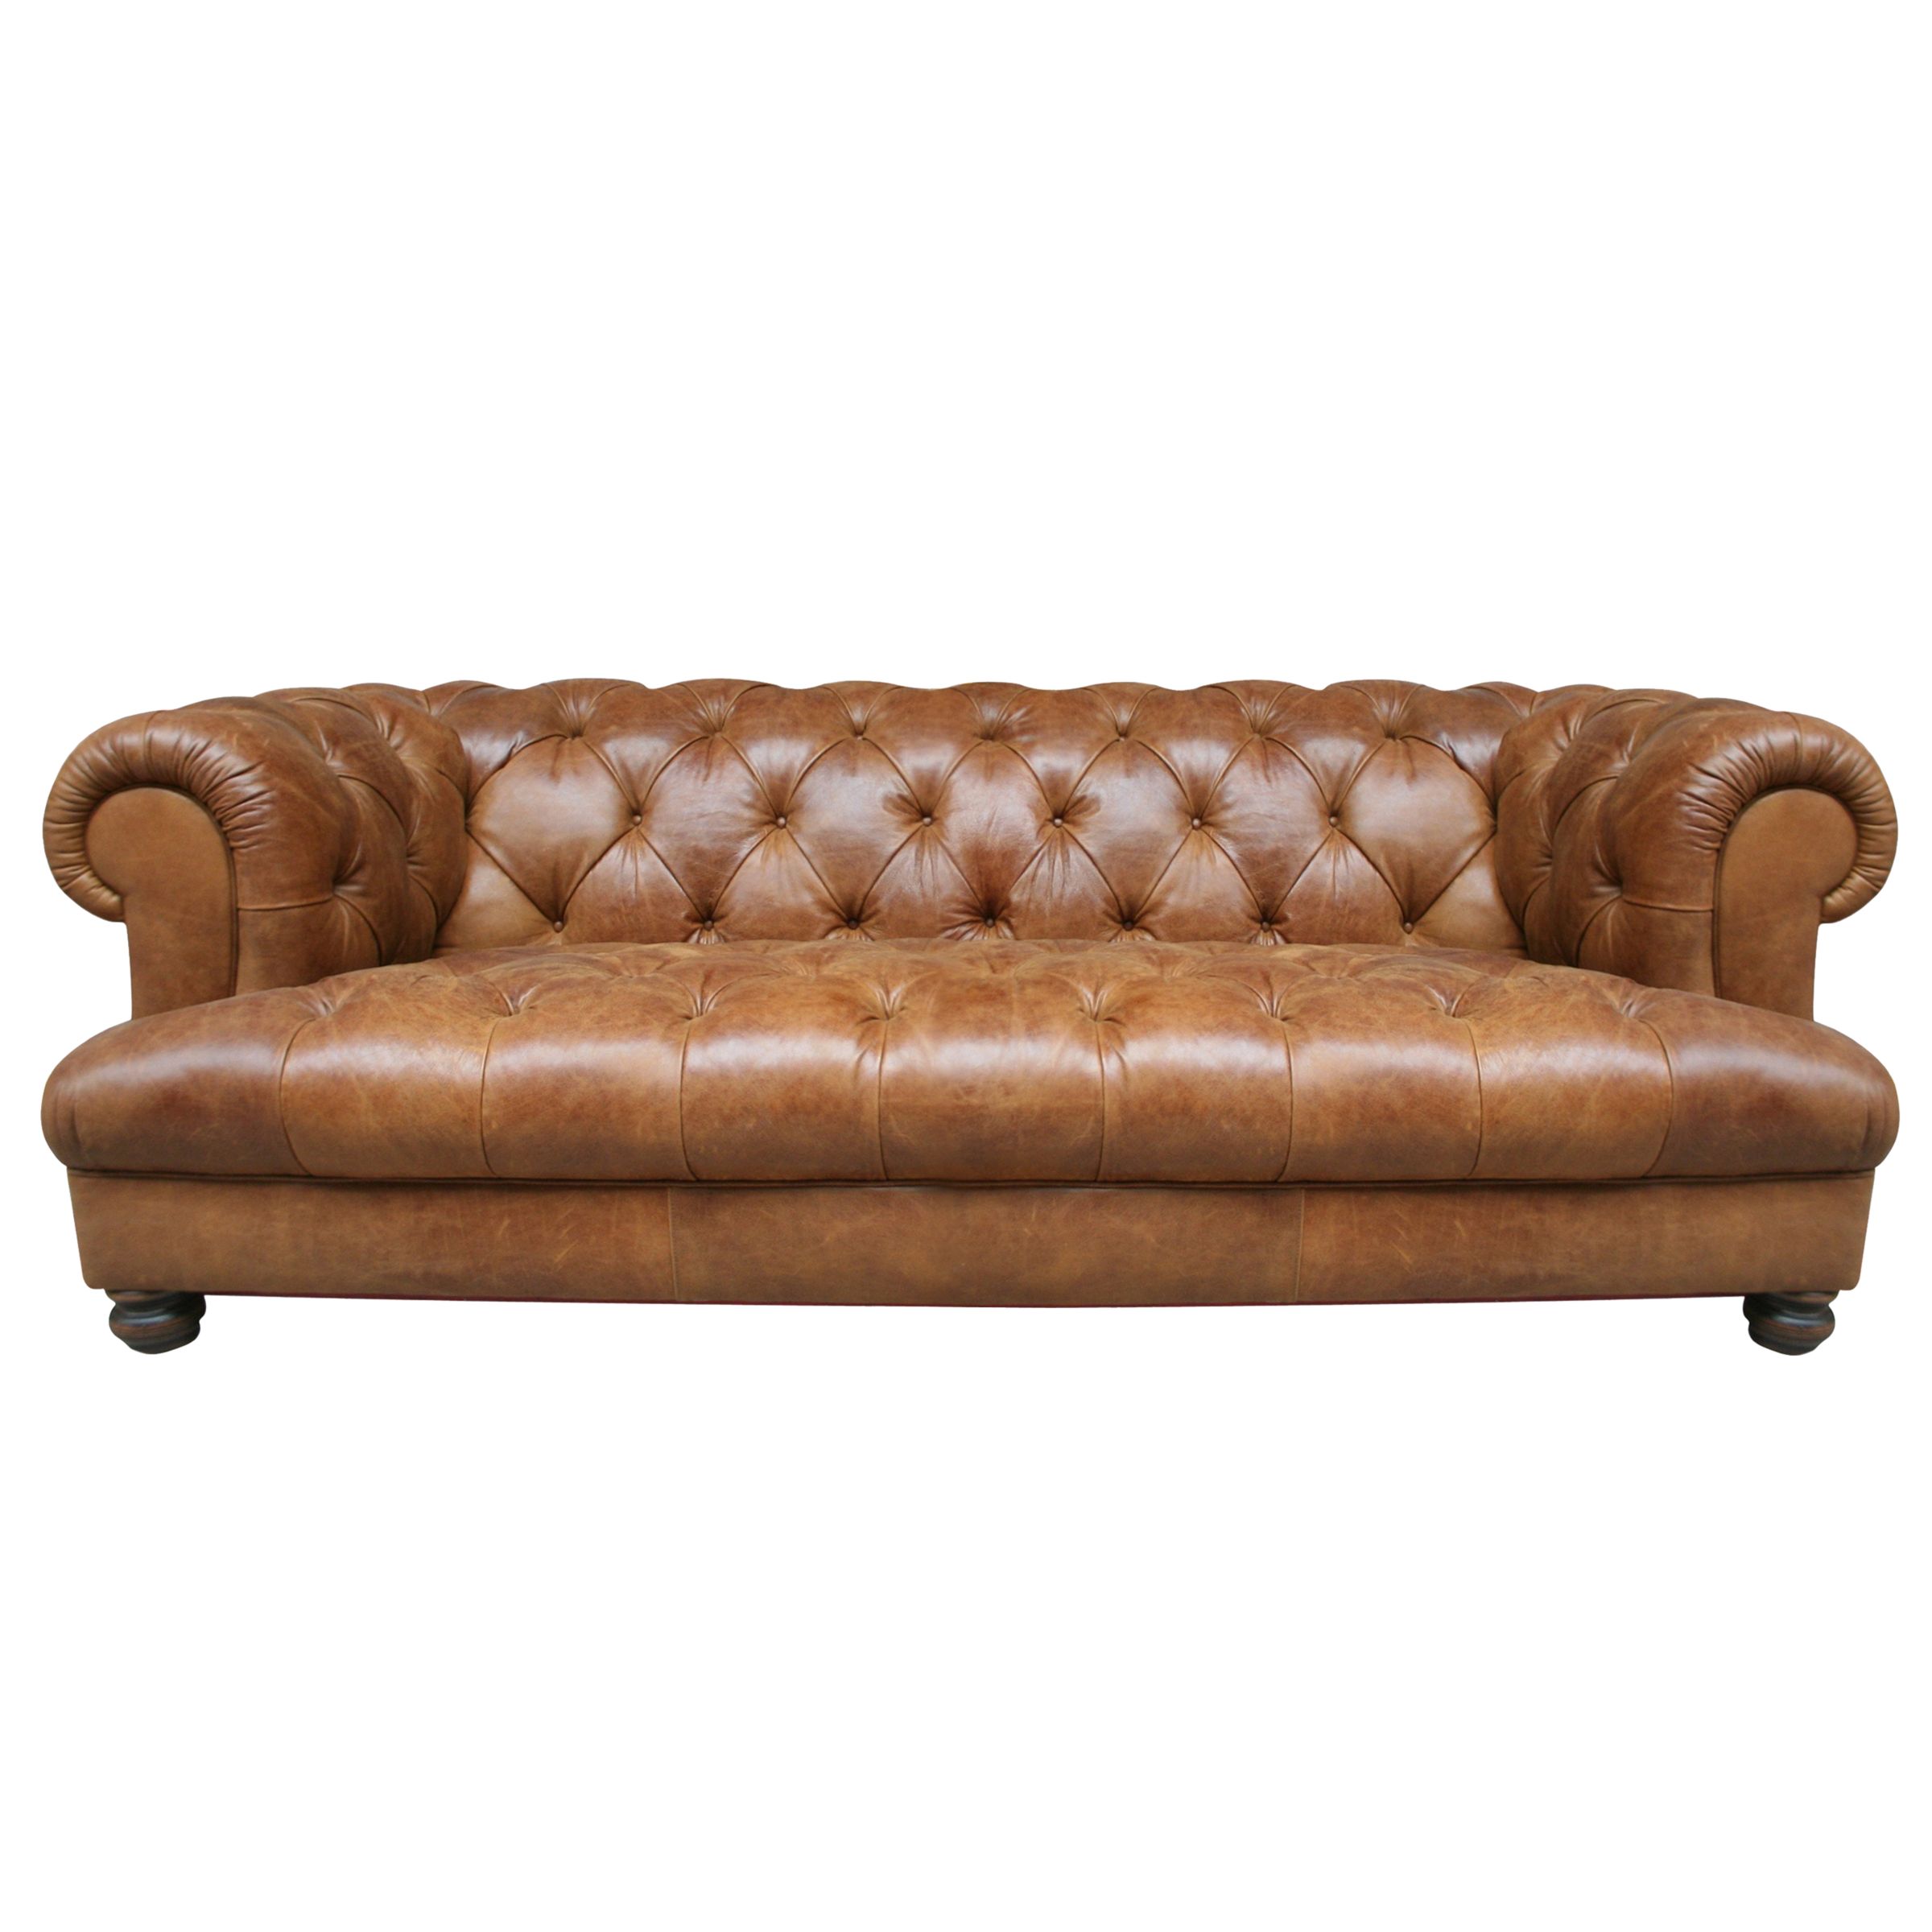 John Lewis Drummond Grand Leather Sofa, Brown at JohnLewis